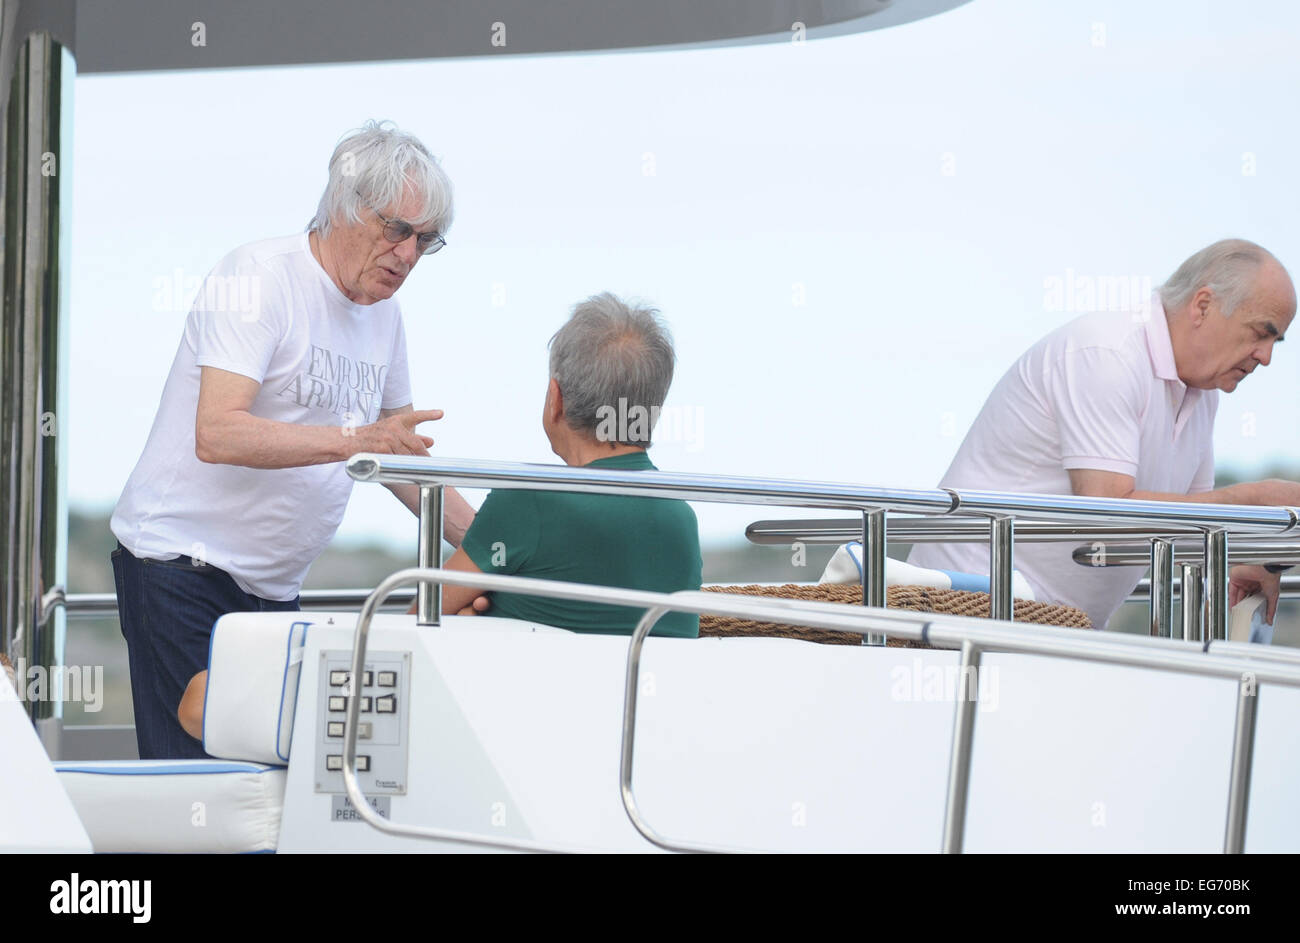 Bernie Ecclestone and his wife Fabiana Flosi spend time with friends on their Petara yacht  Featuring: Bernie Ecclestone Where: Sibenik, Croatia When: 16 Aug 2014 Stock Photo